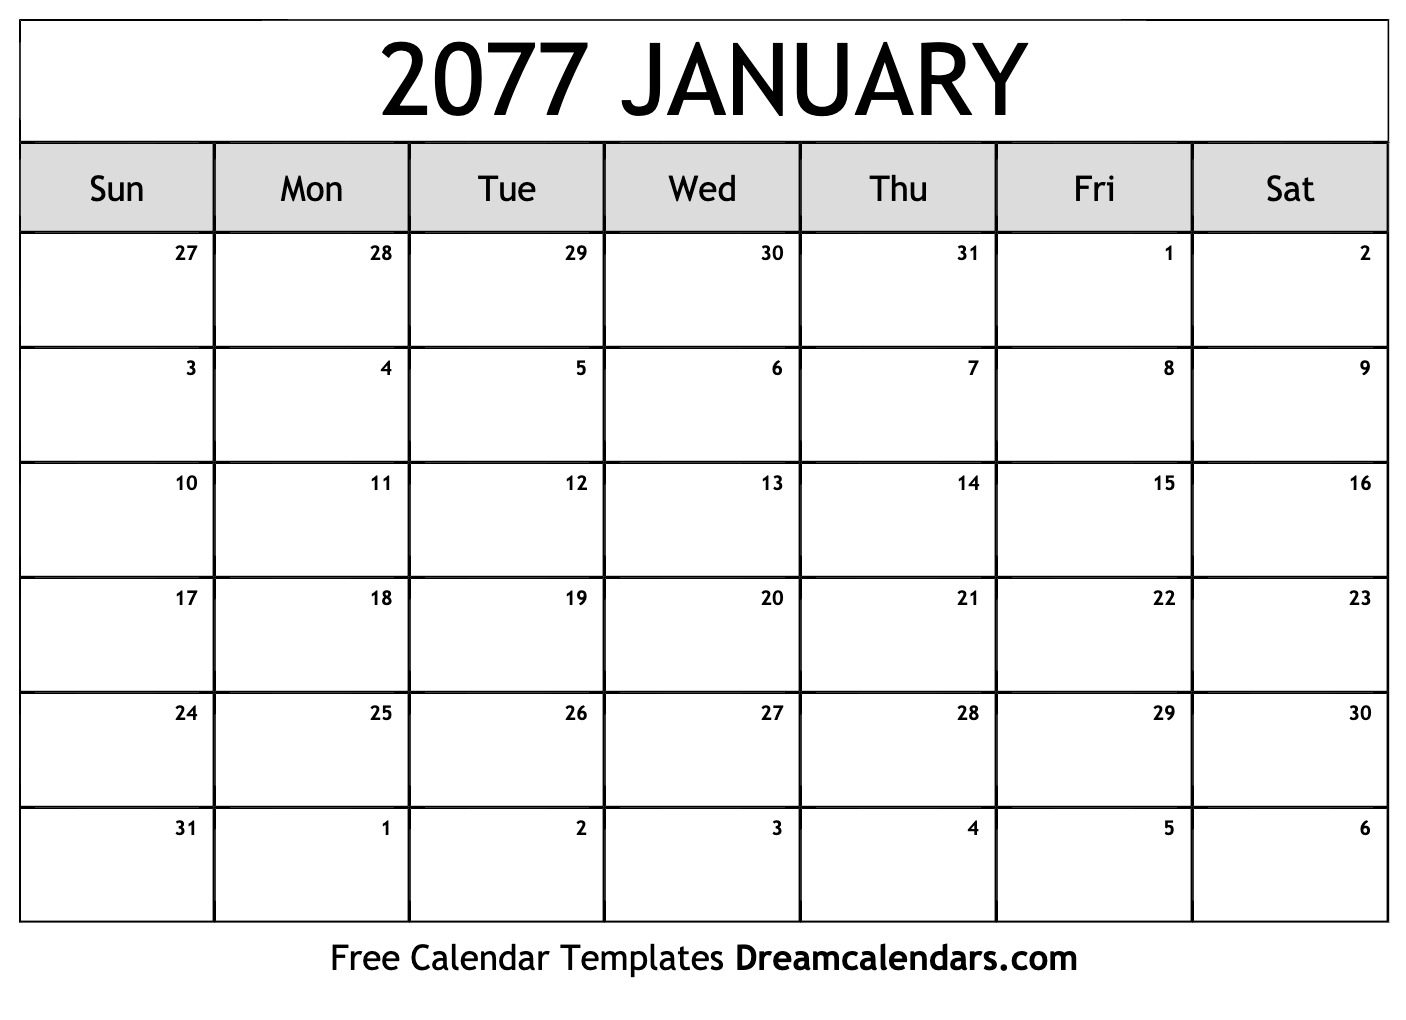 january-2077-calendar-free-blank-printable-with-holidays